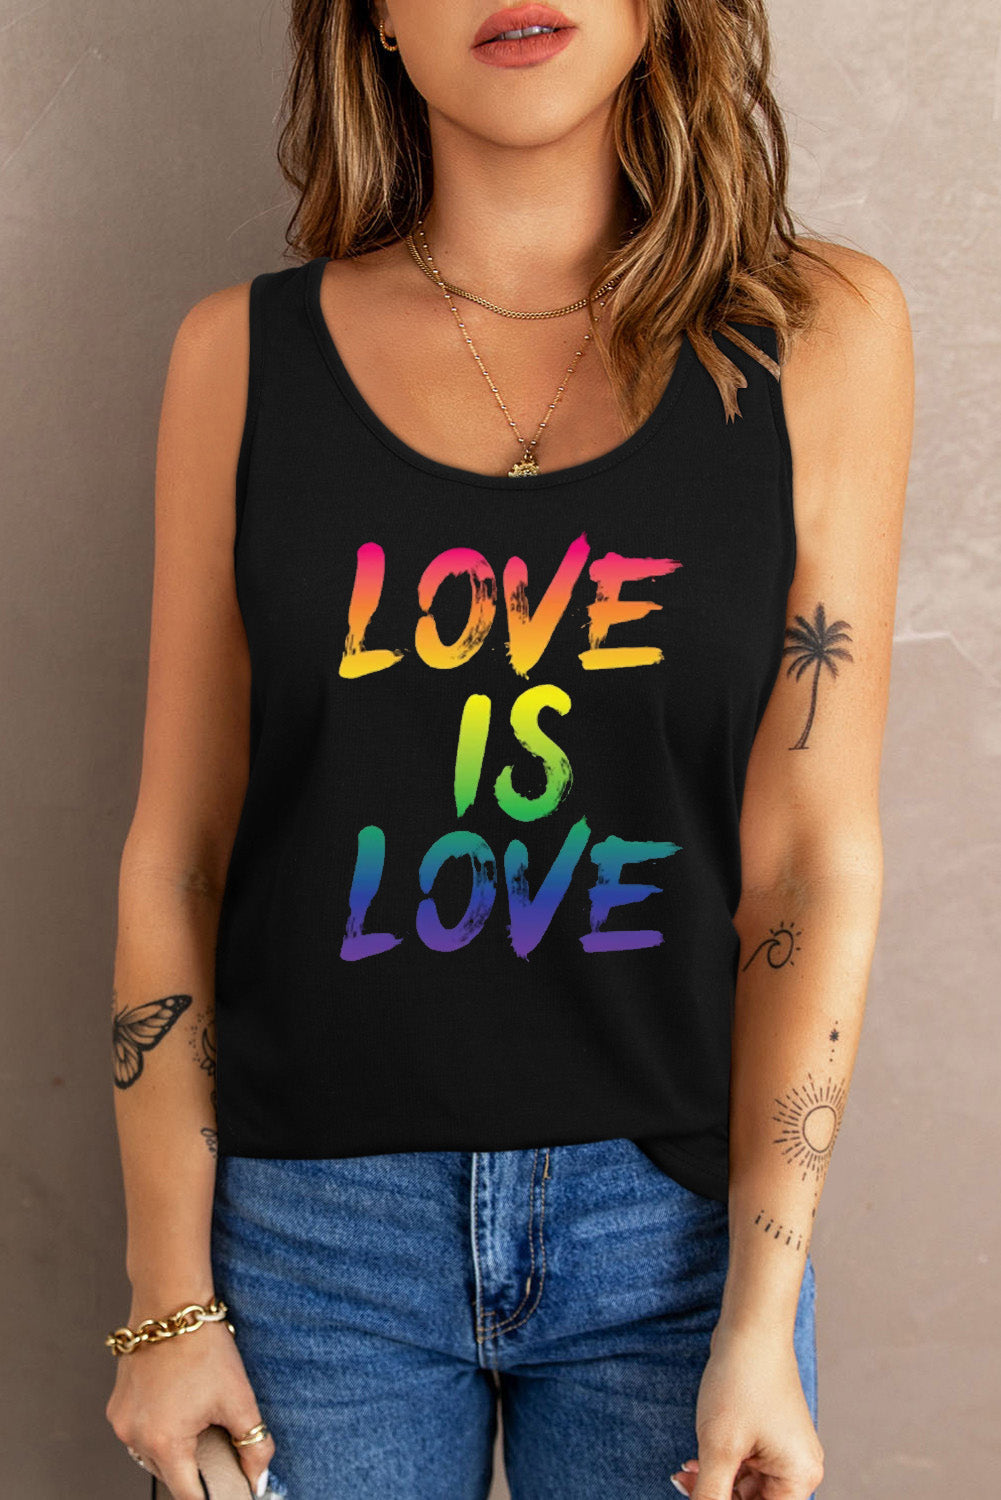 LC2566430-2-S, LC2566430-2-M, LC2566430-2-L, LC2566430-2-XL, LC2566430-2-2XL, Black Love Is Love Rainbow Short Sleeve T Shirt Womens LGBT Gay Pride Tee Shirt